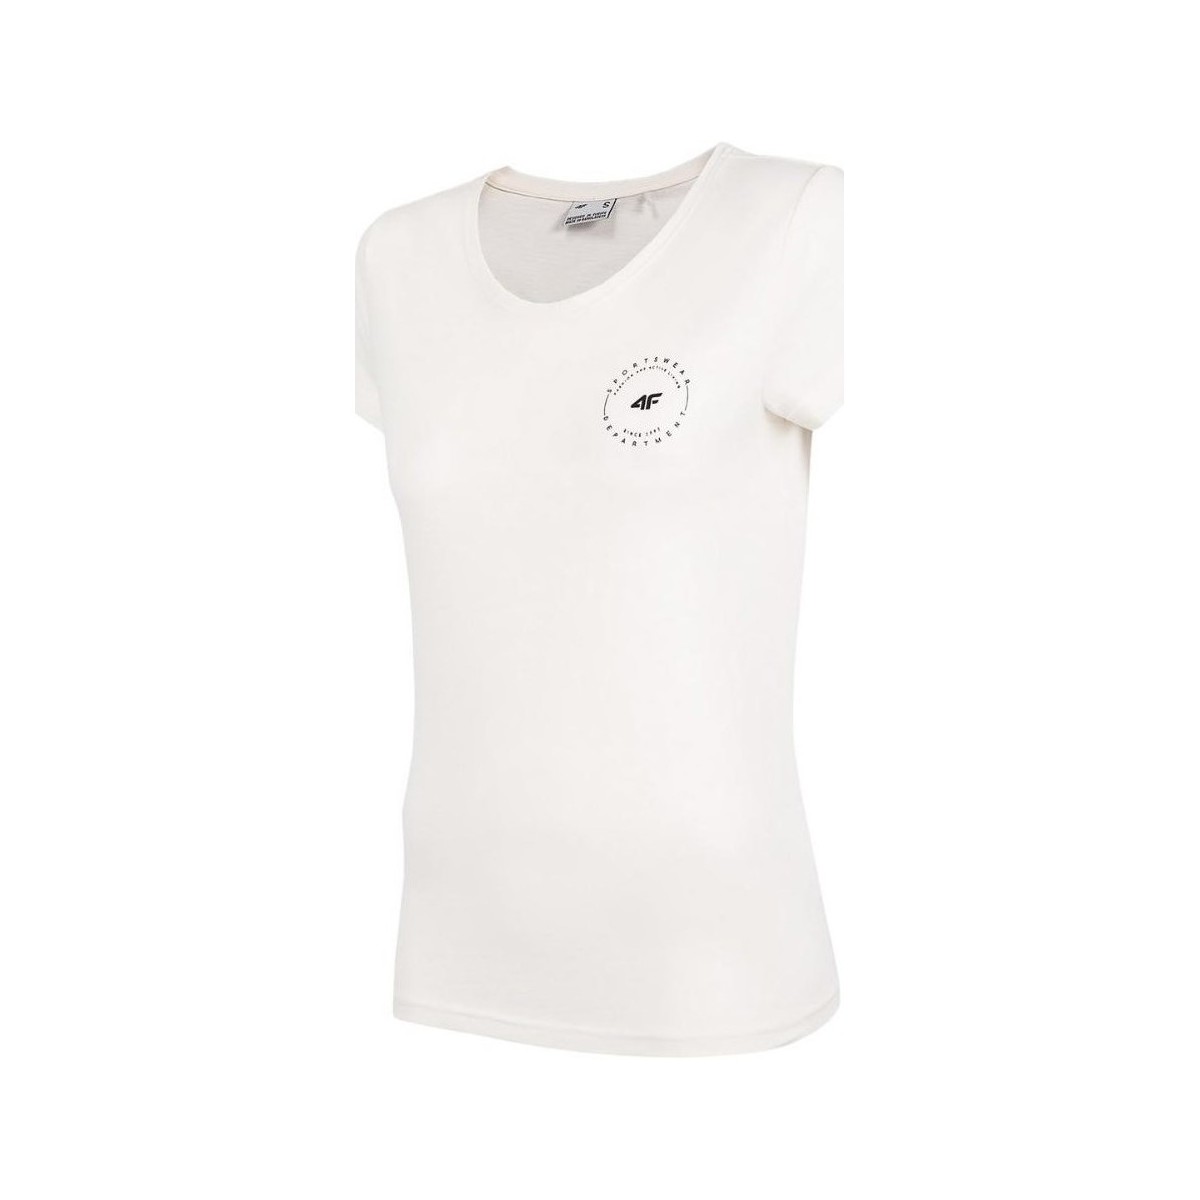 textil Dame T-shirts m. korte ærmer 4F TSD033 Hvid